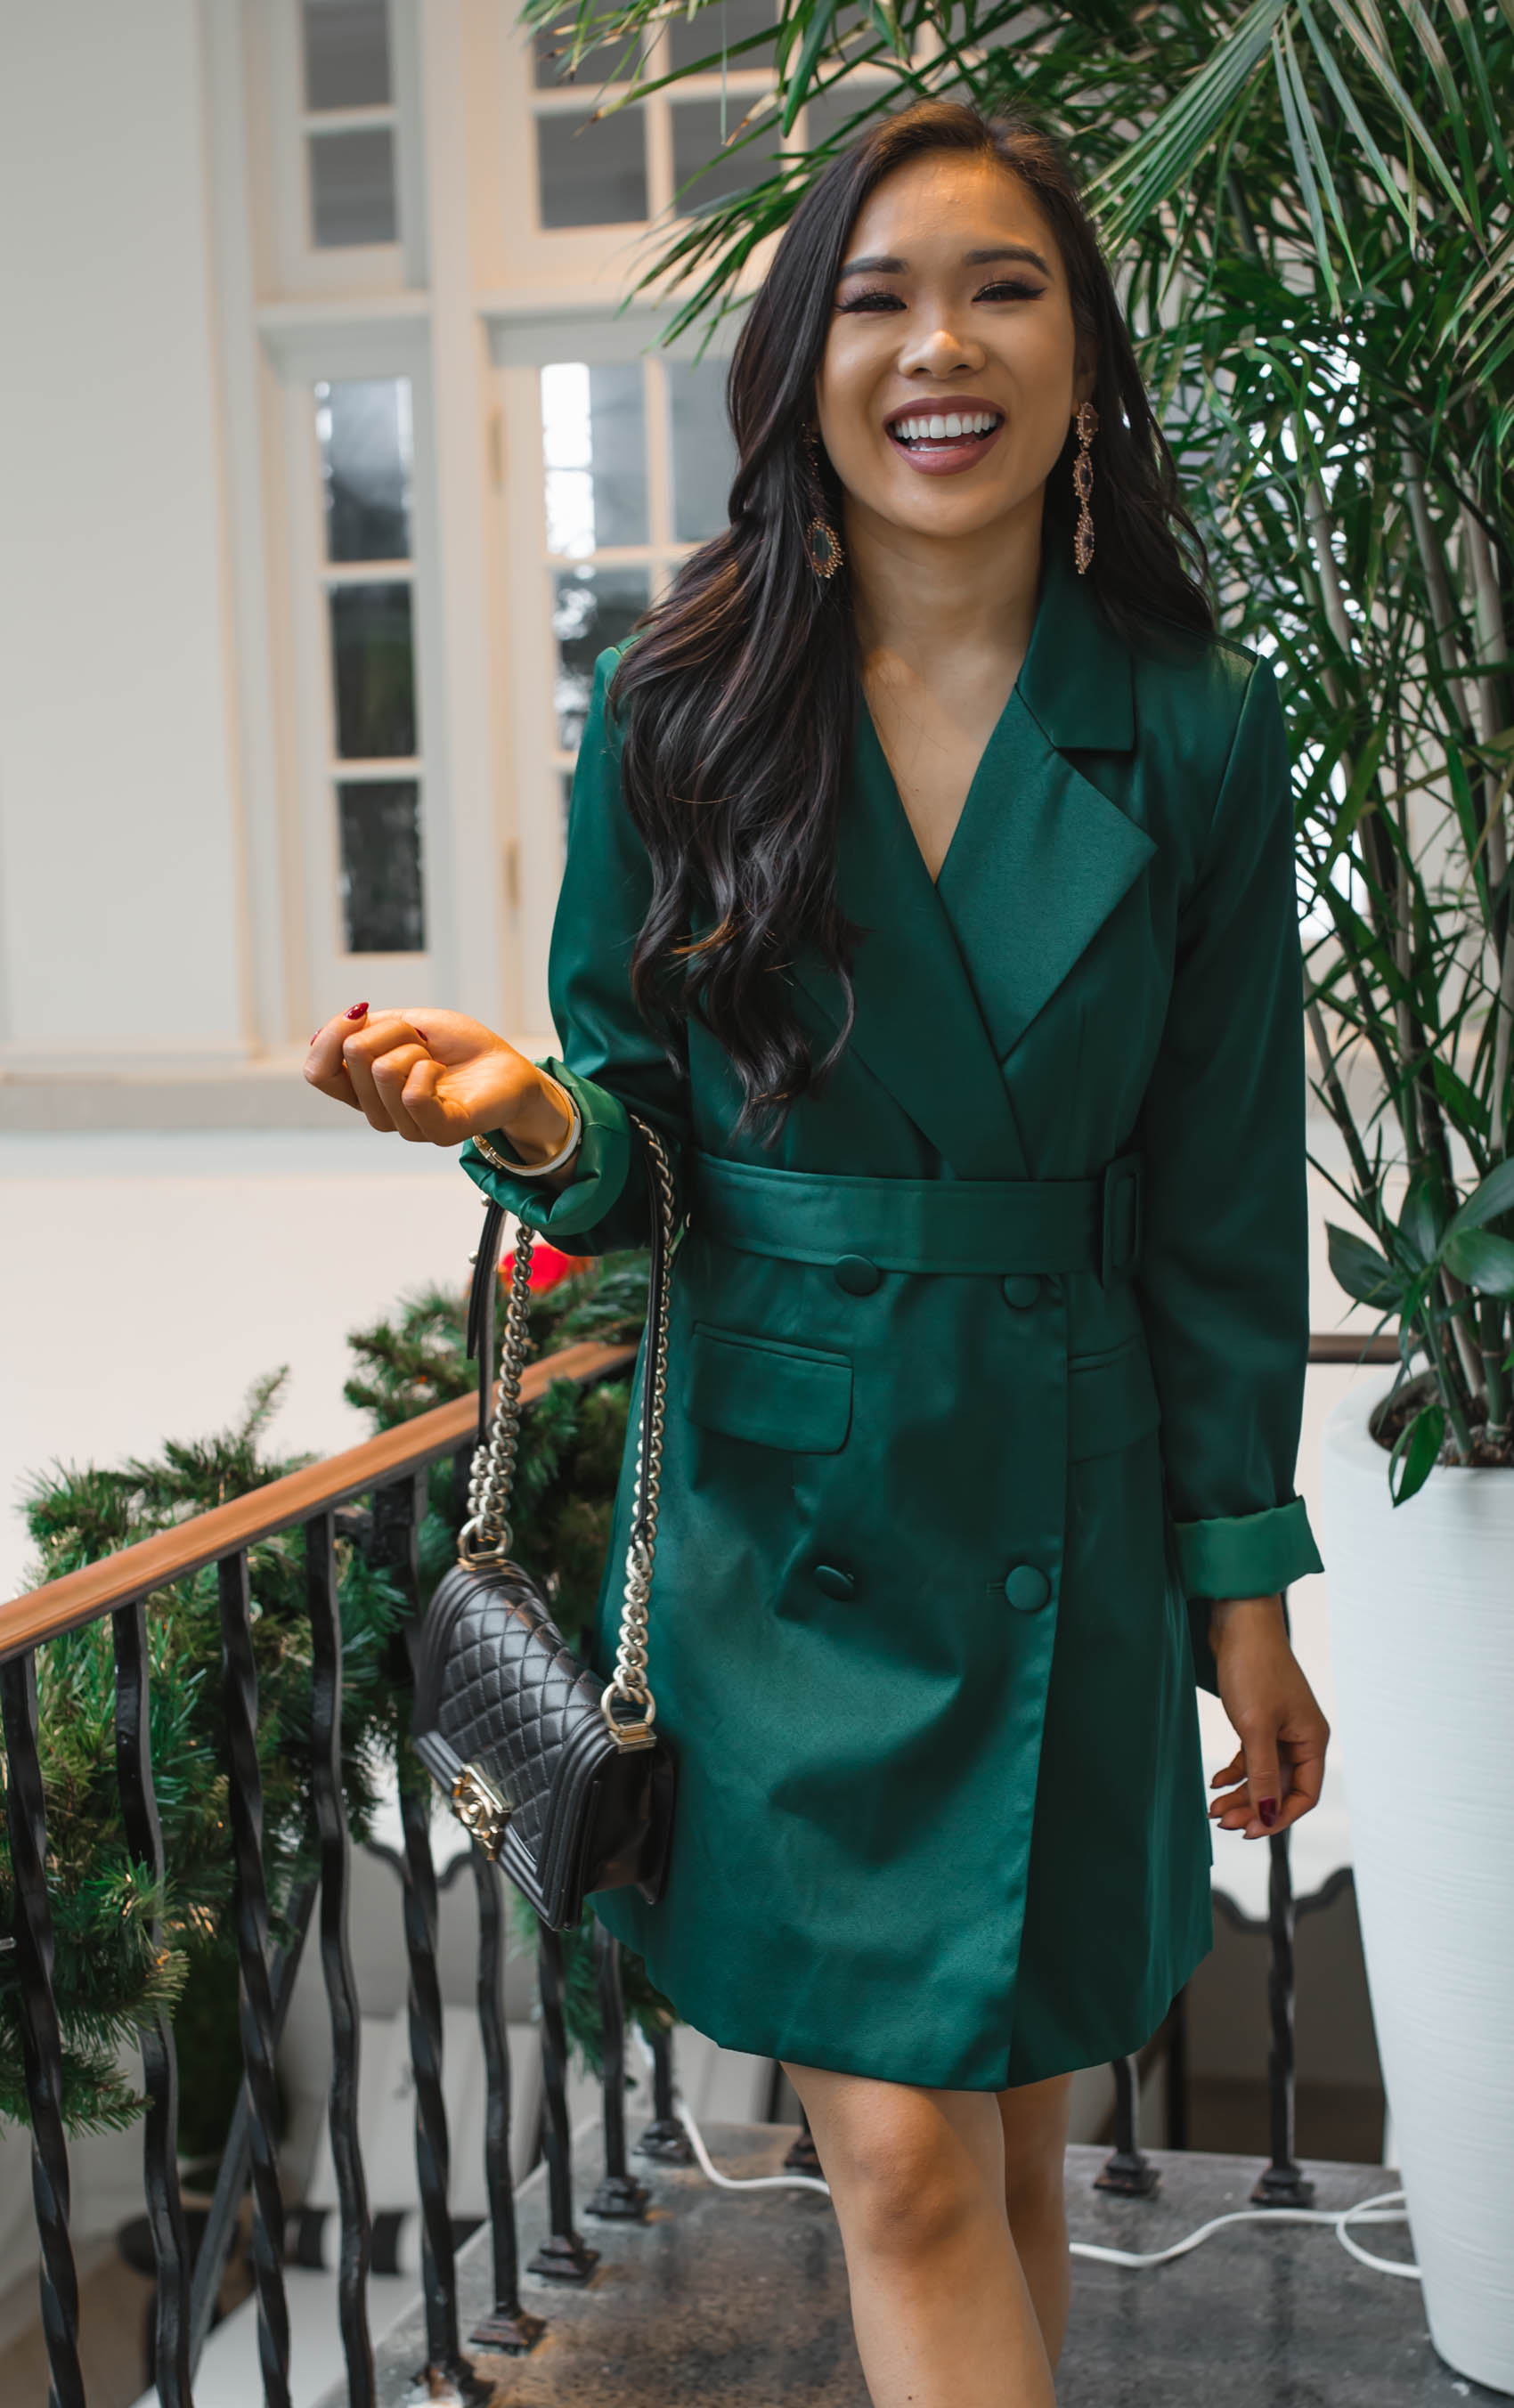 Blogger Hoang-Kim wears a green blazer dress and Kendra Scott earrings